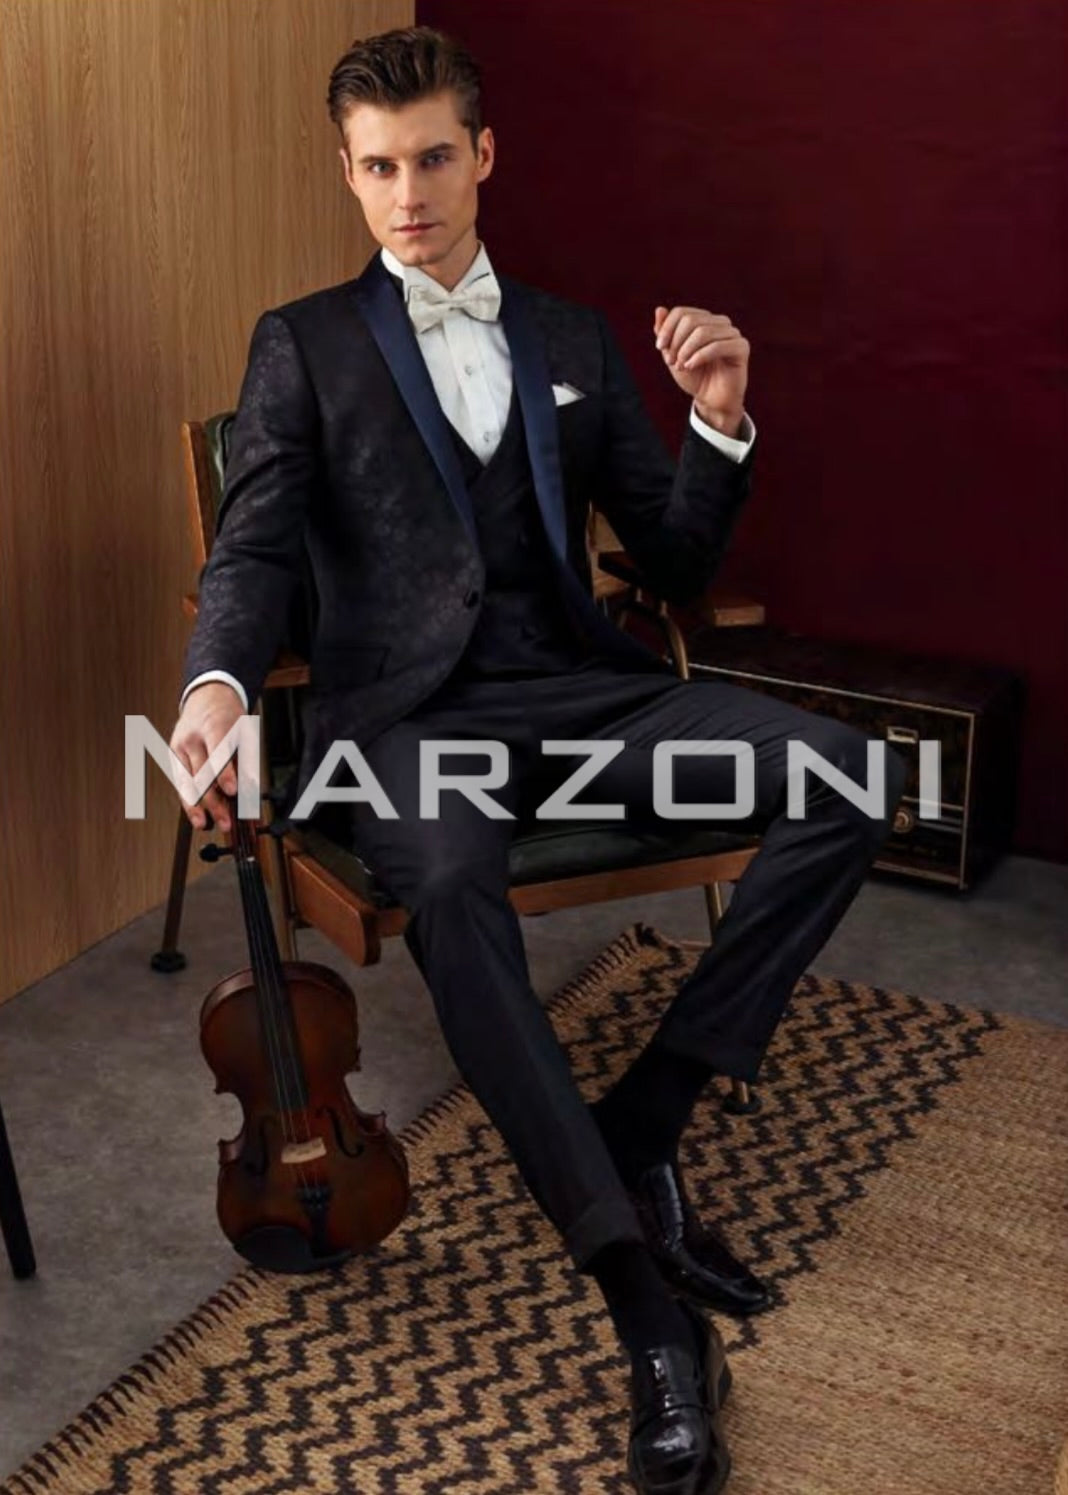 Marzoni Charcoal and Grey Tuxedo